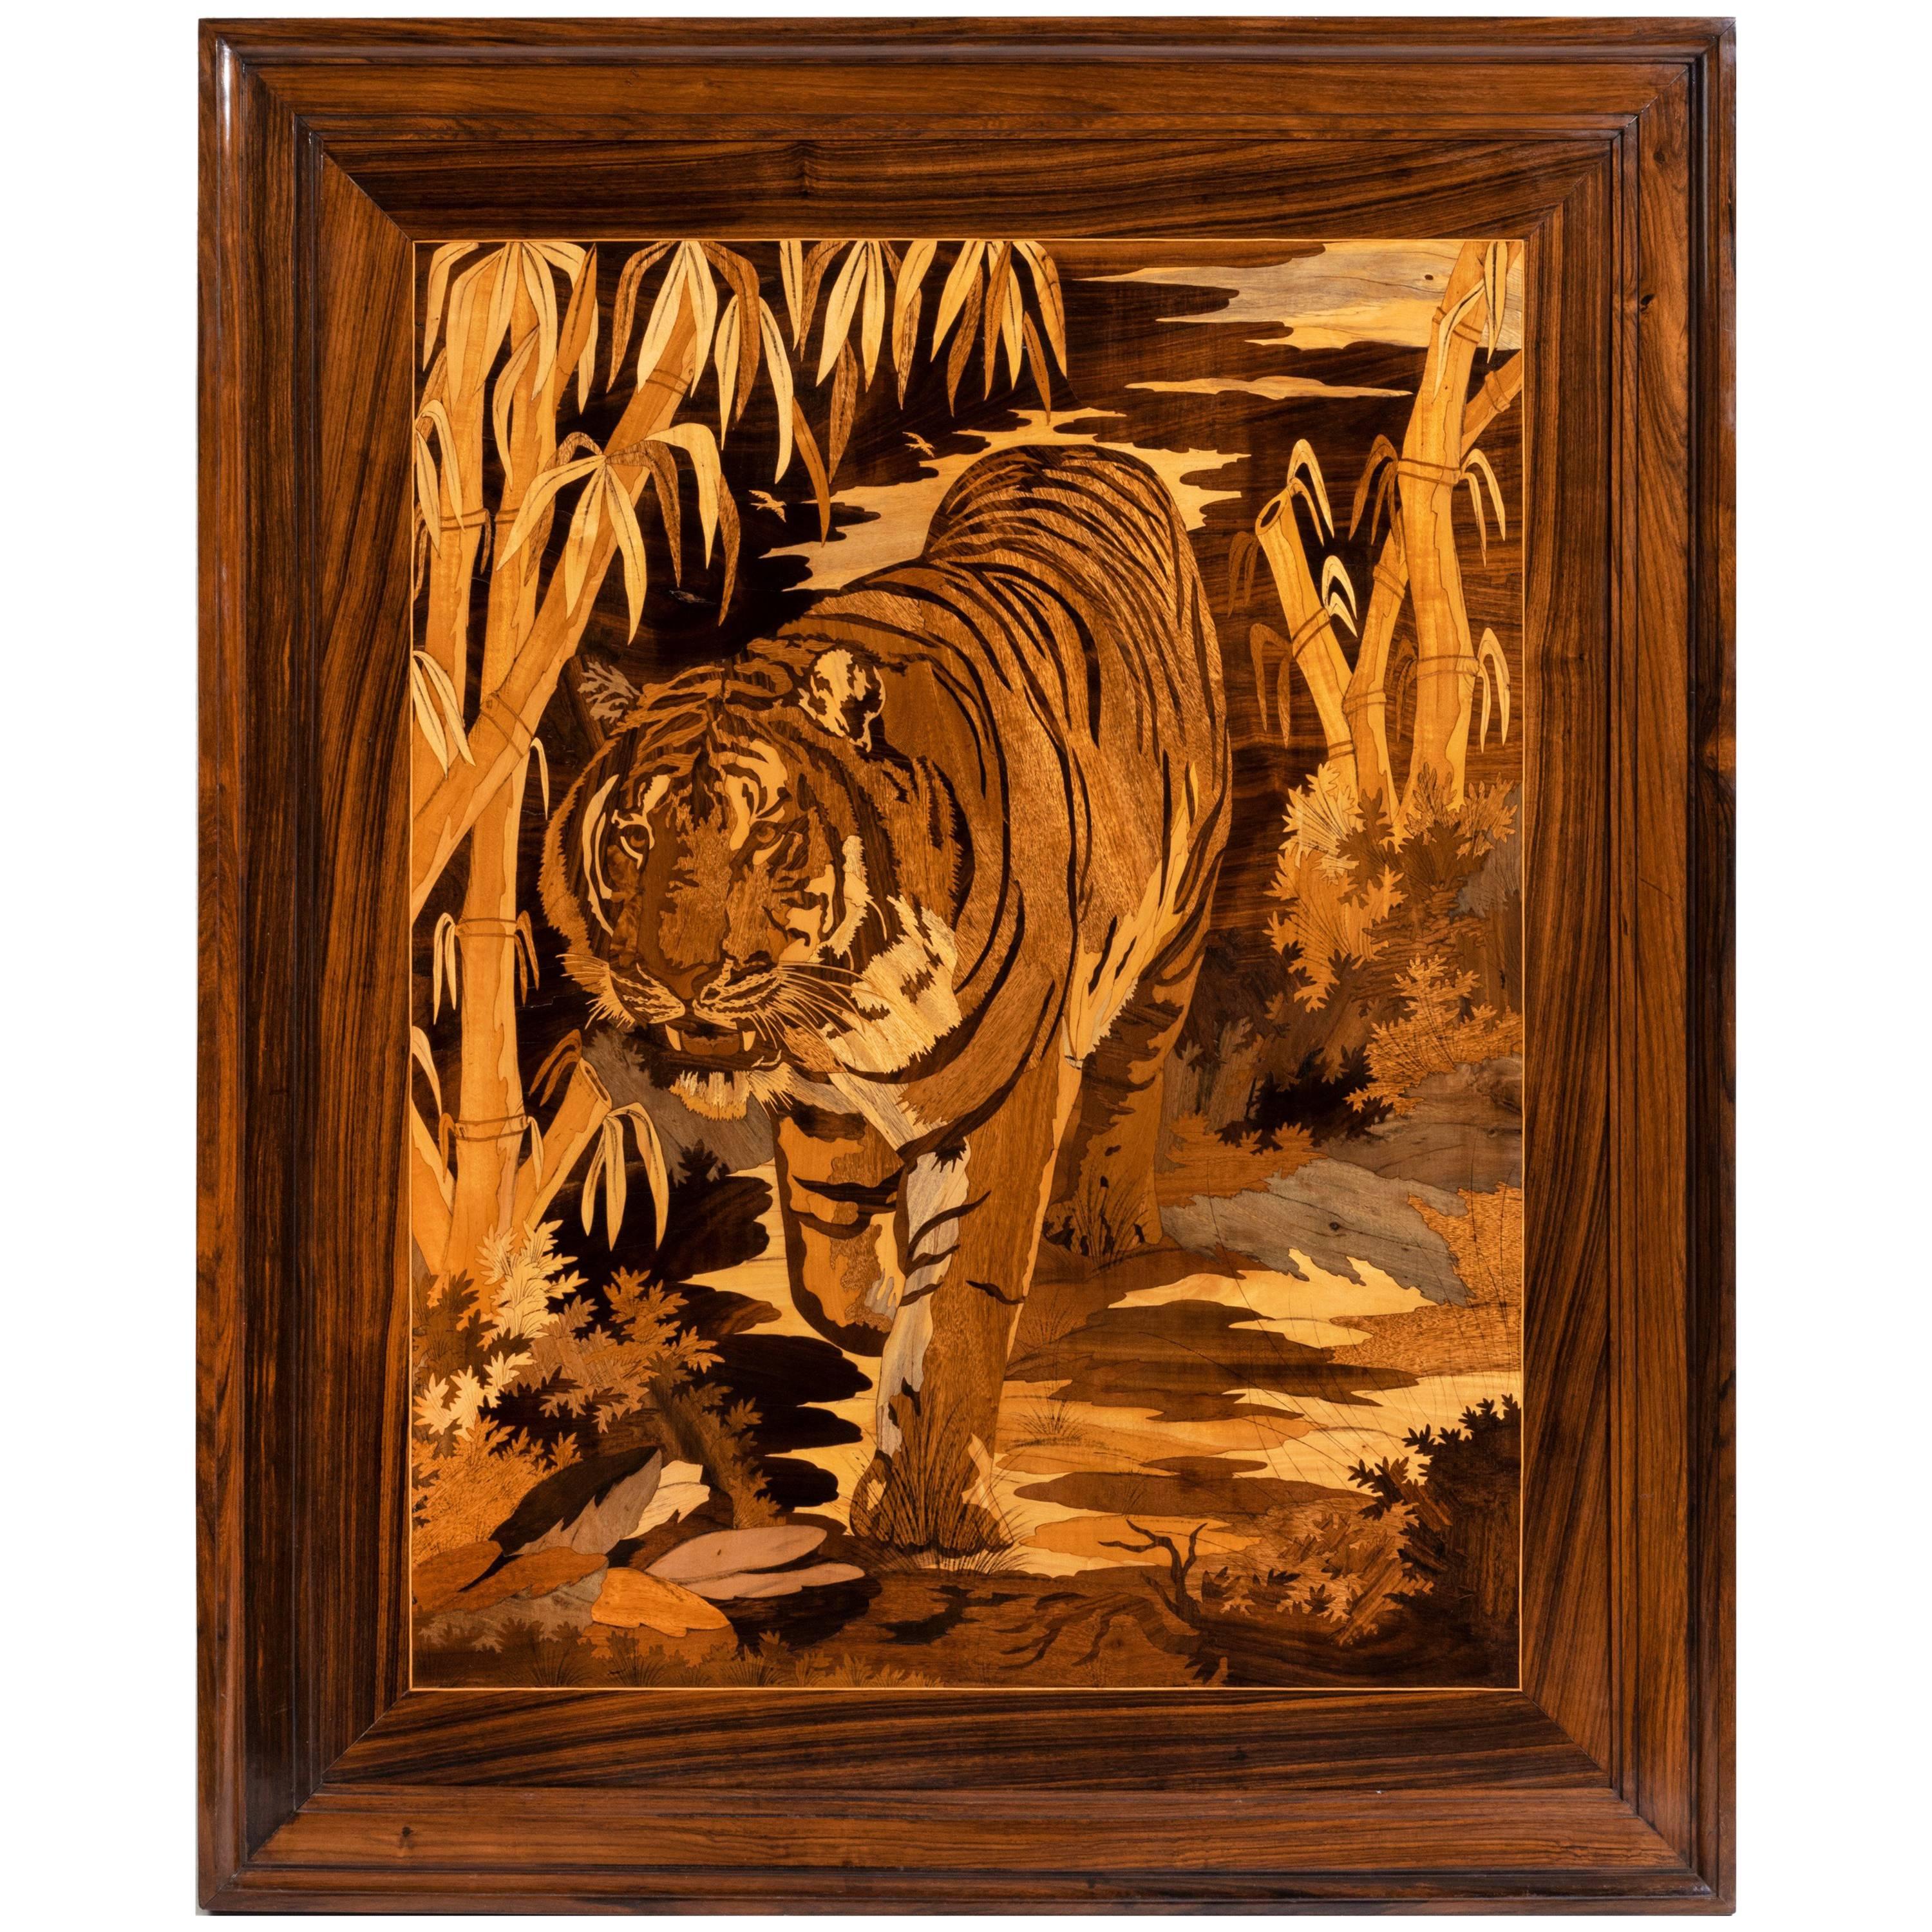 Dramatic Art Deco Period Intarsia Wood Panel of a Tiger